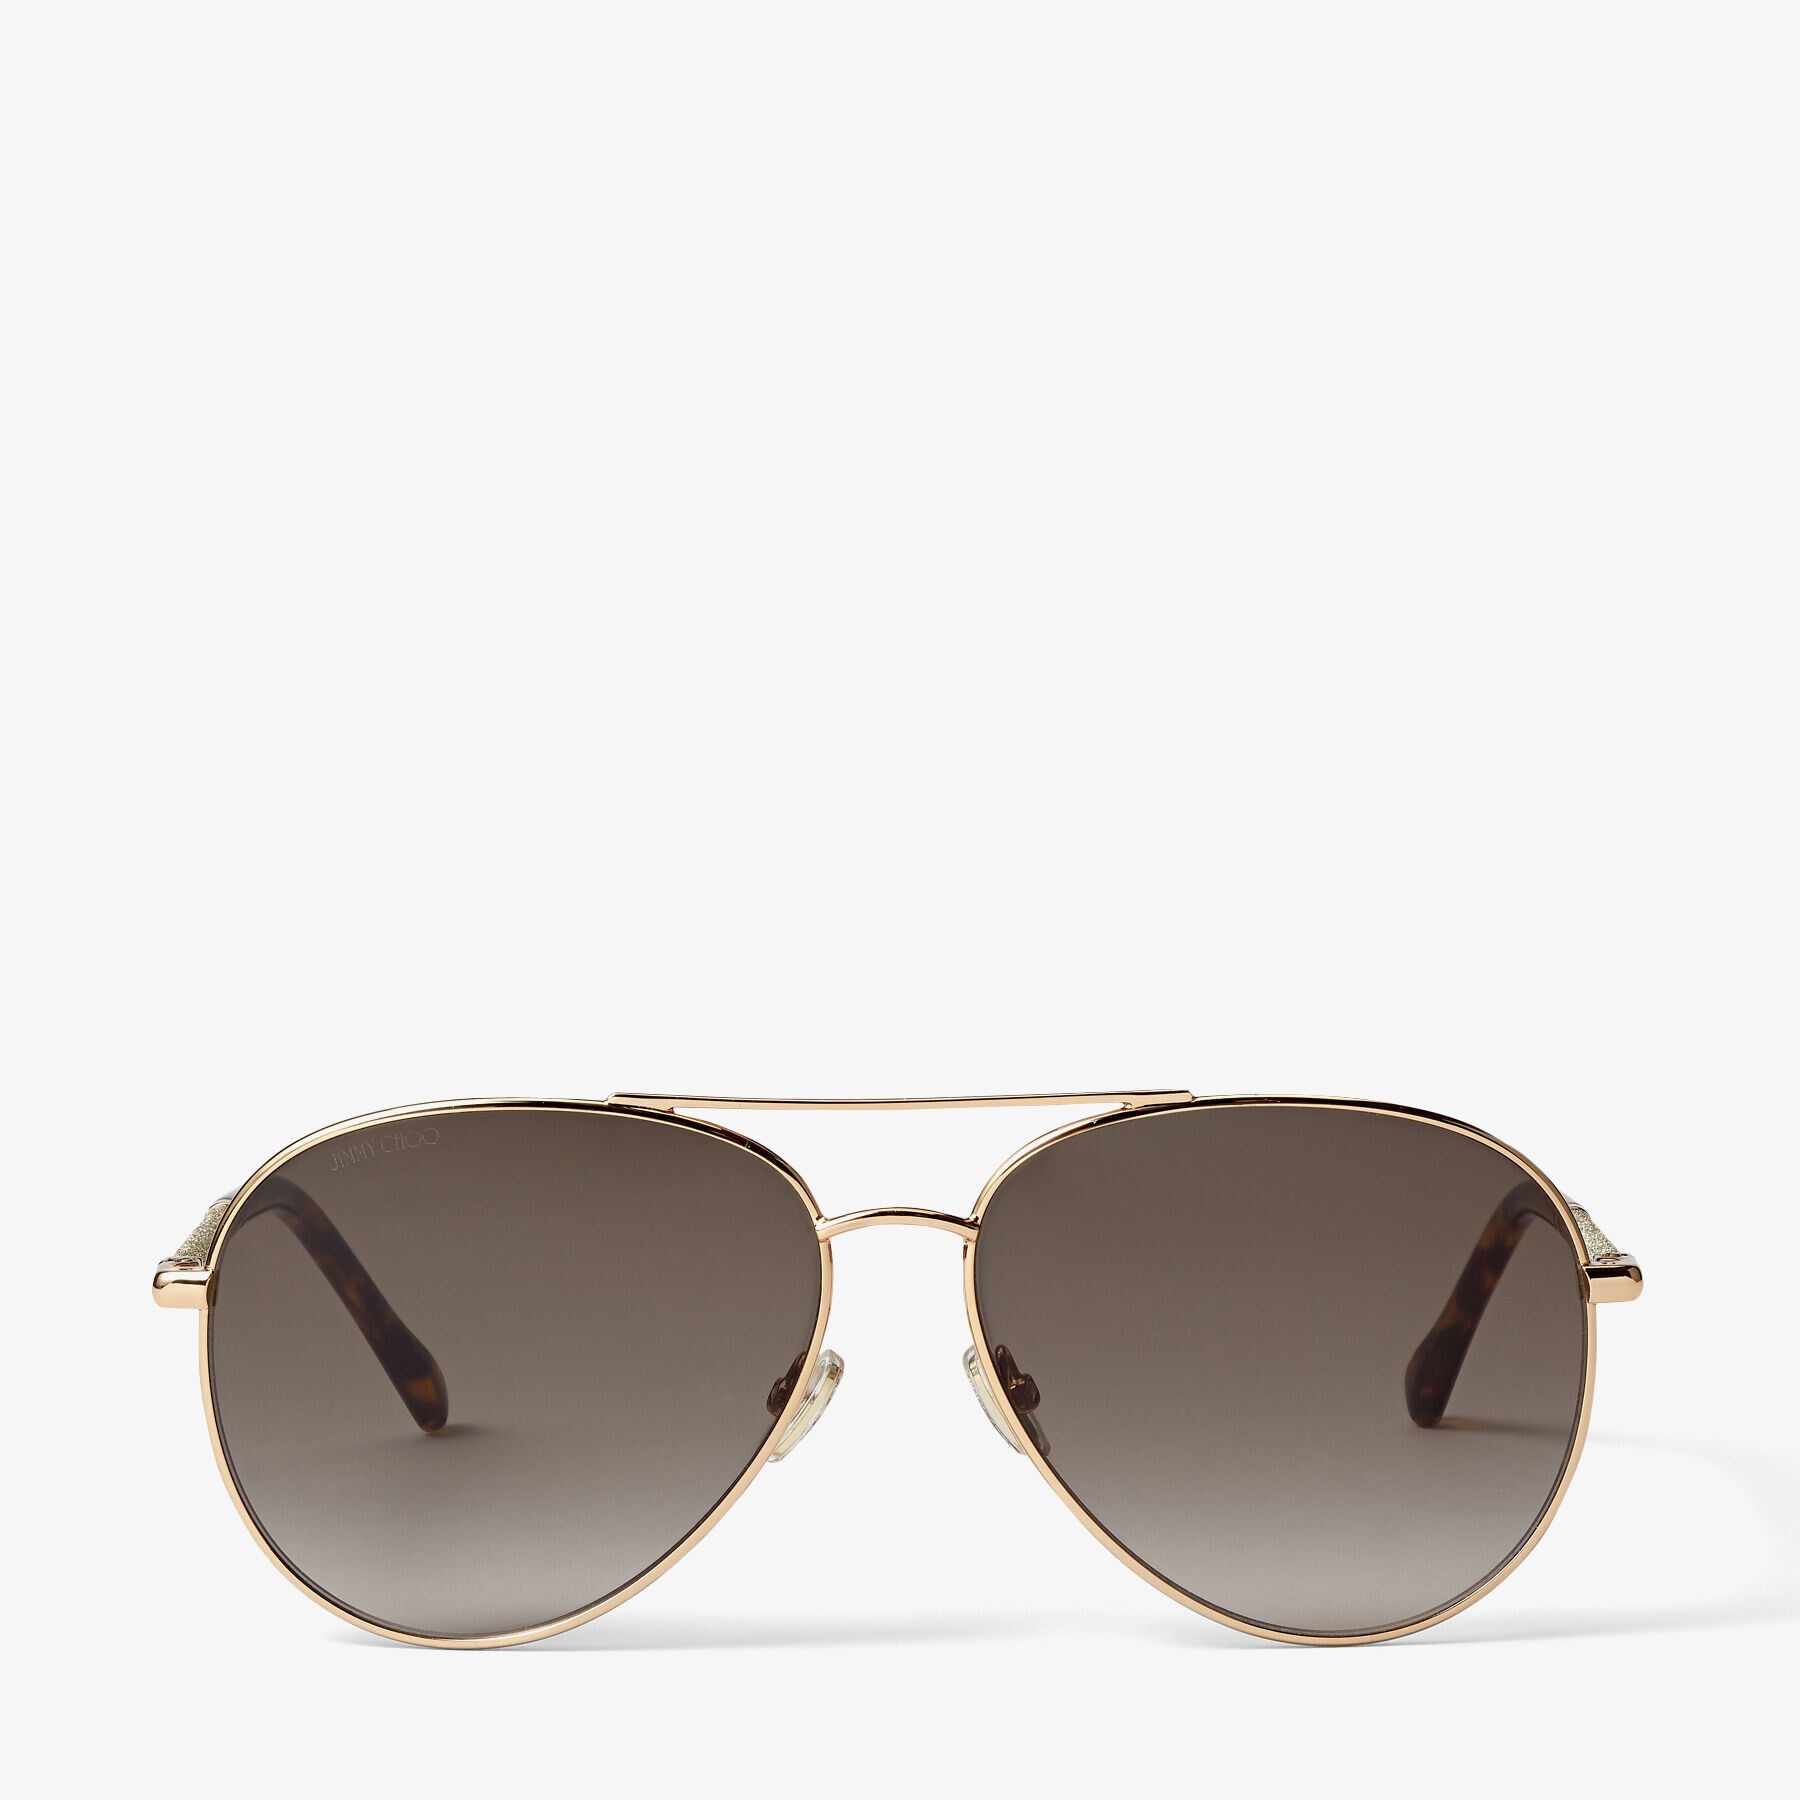 Devan
Gold Havana Aviator Sunglasses with Glitter - 1